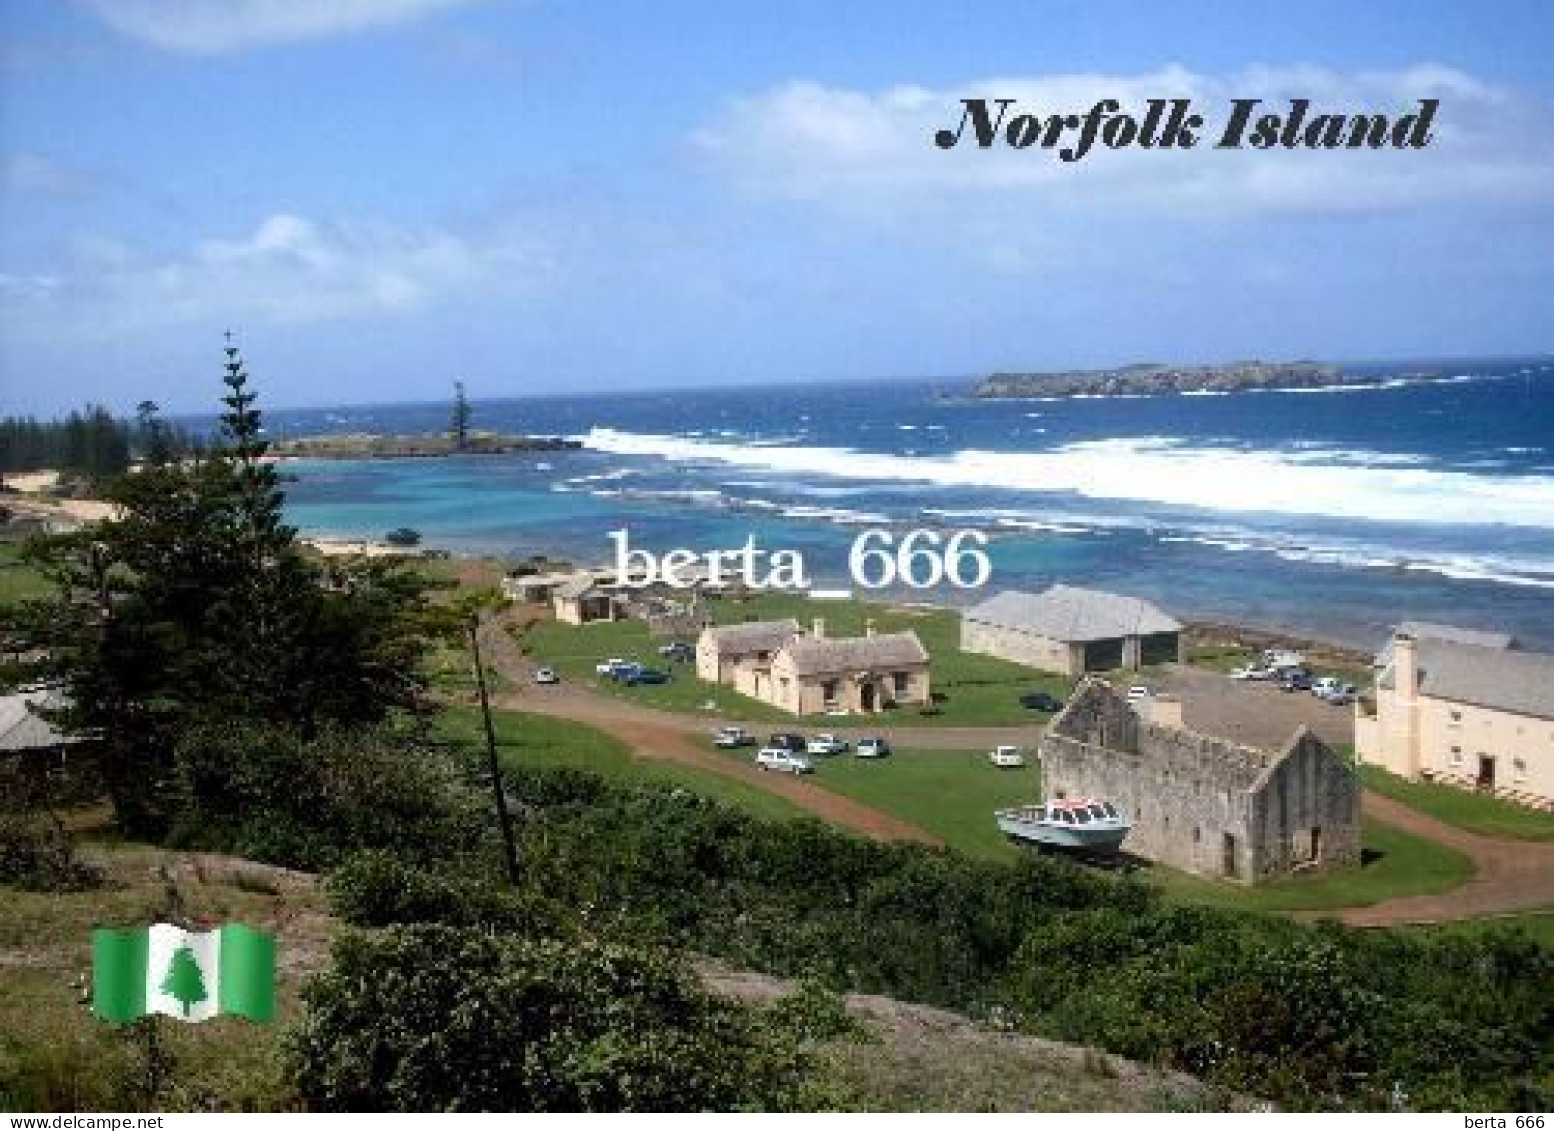 Australia Norfolk Island New Postcard - Norfolk Island